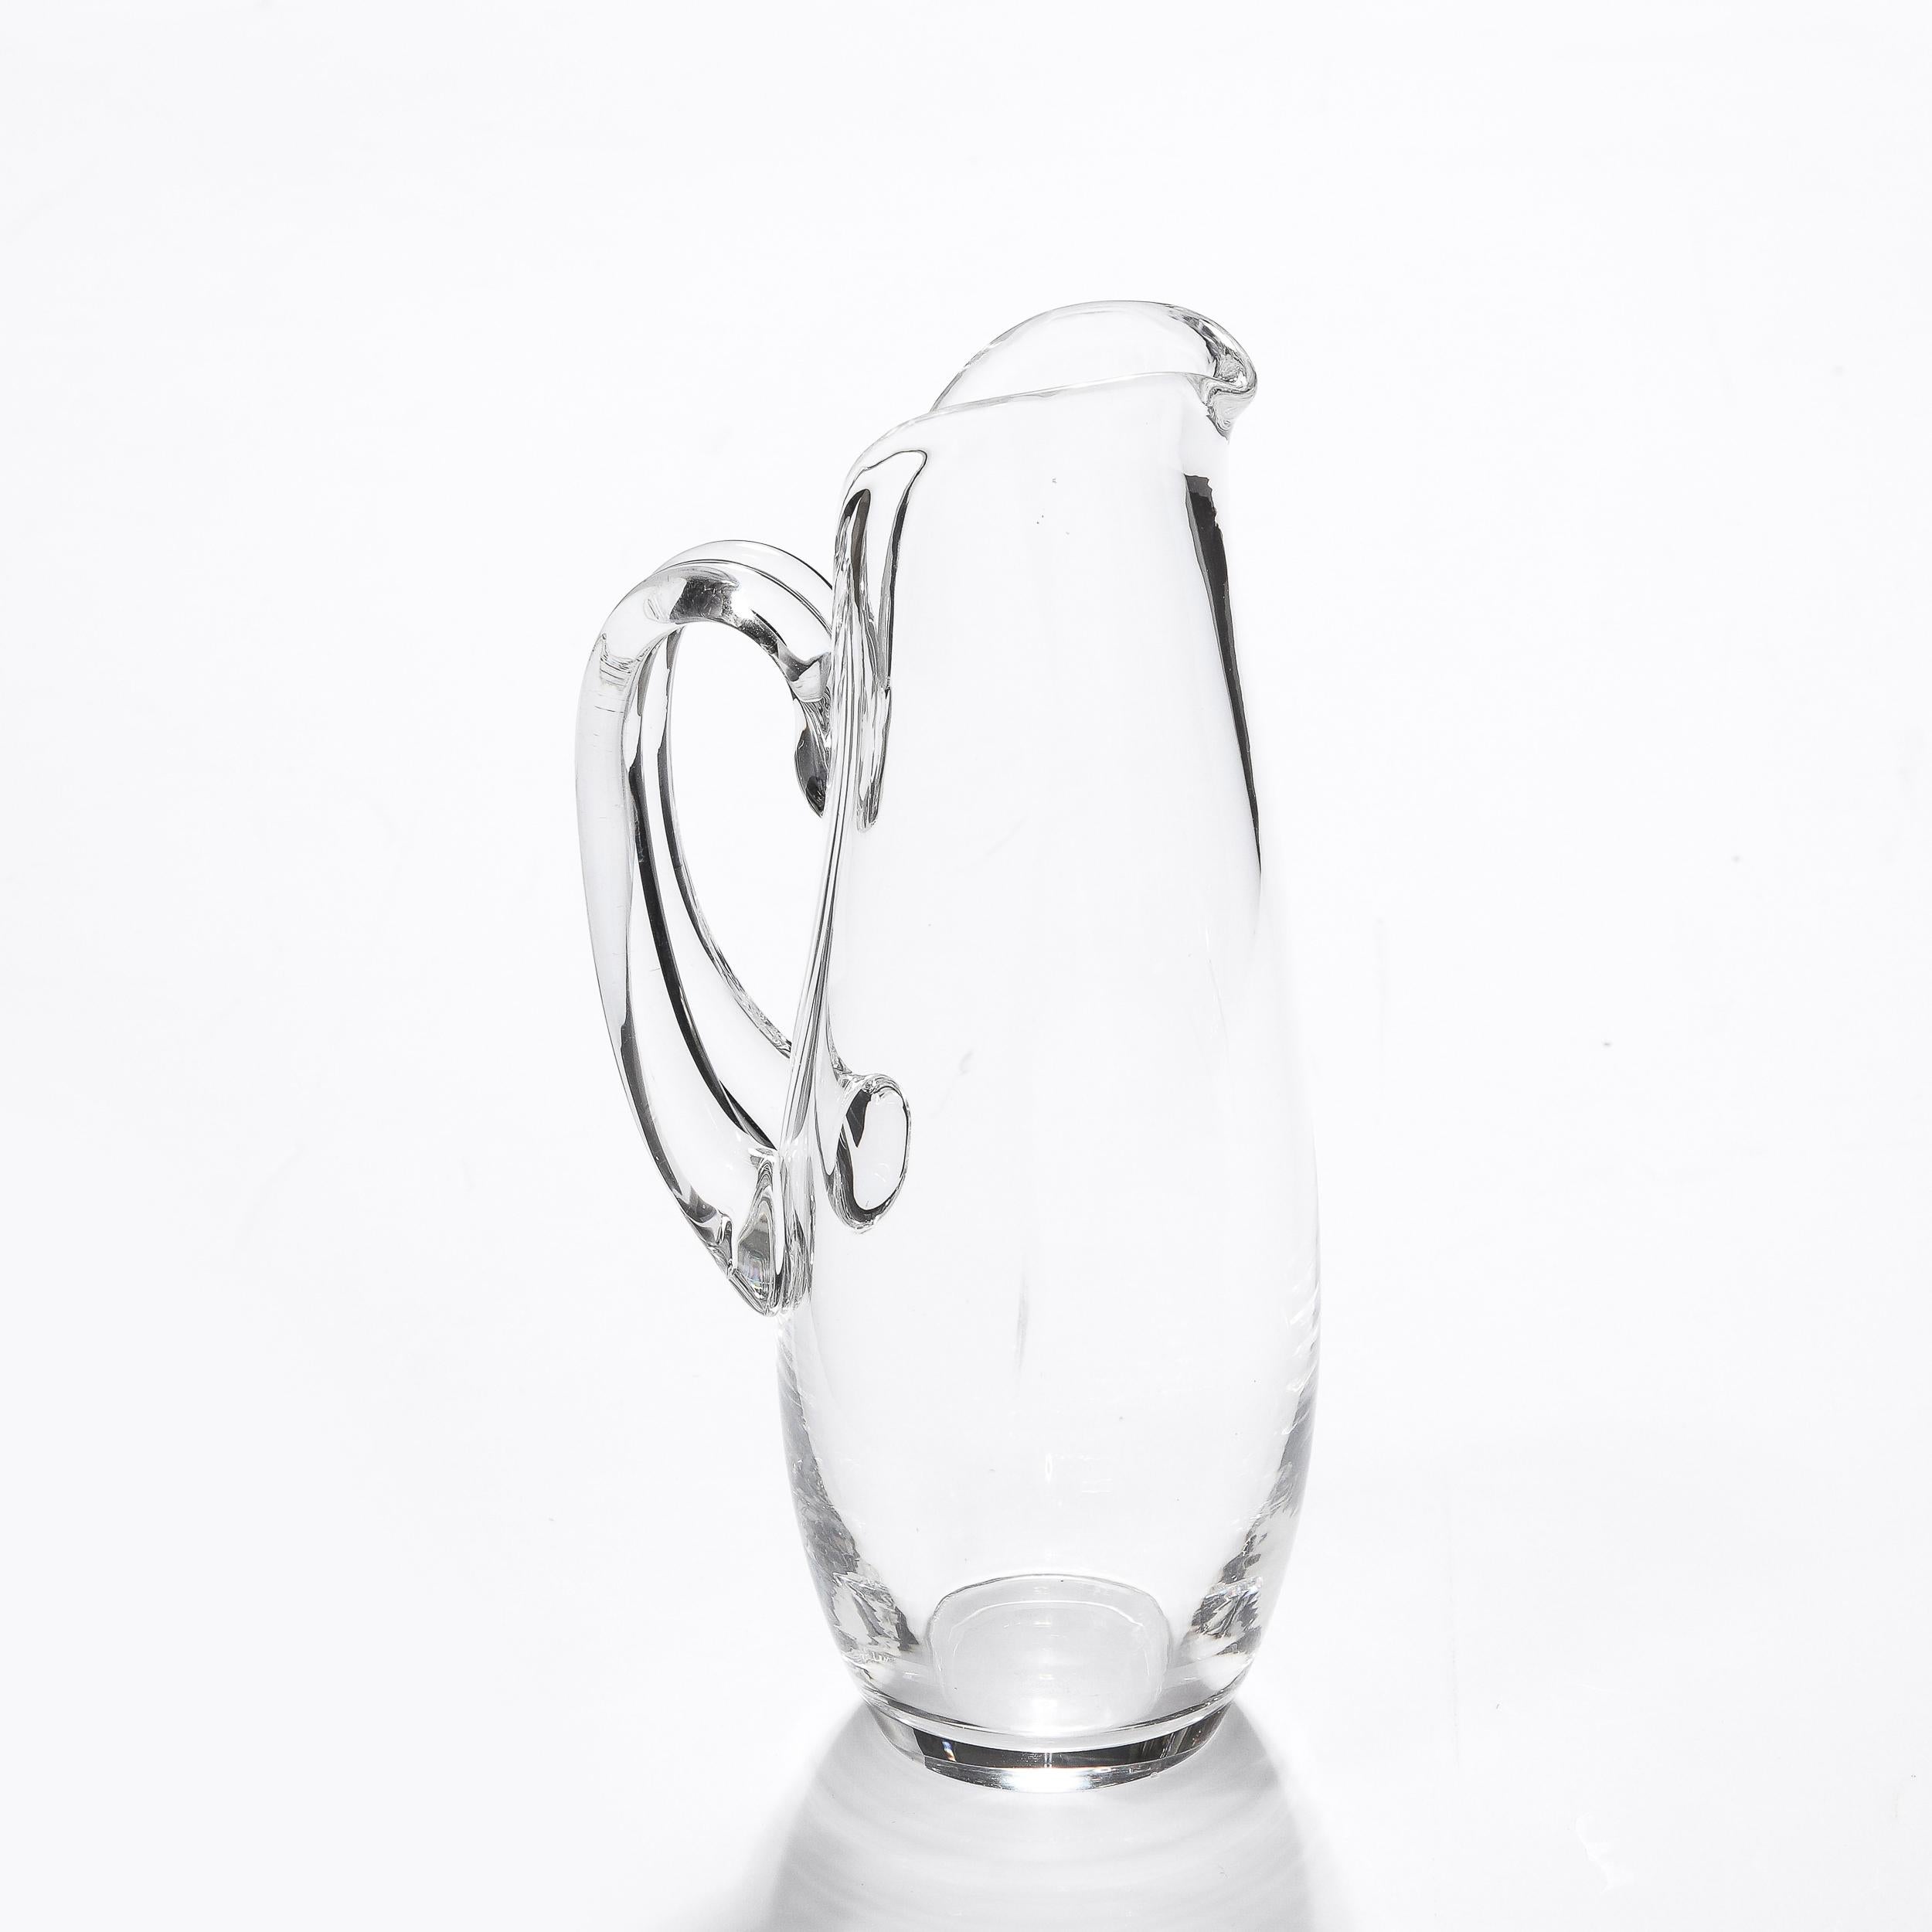 American Mid-Century Modernist Hand-Blown Glass Pitcher Signed Steuben